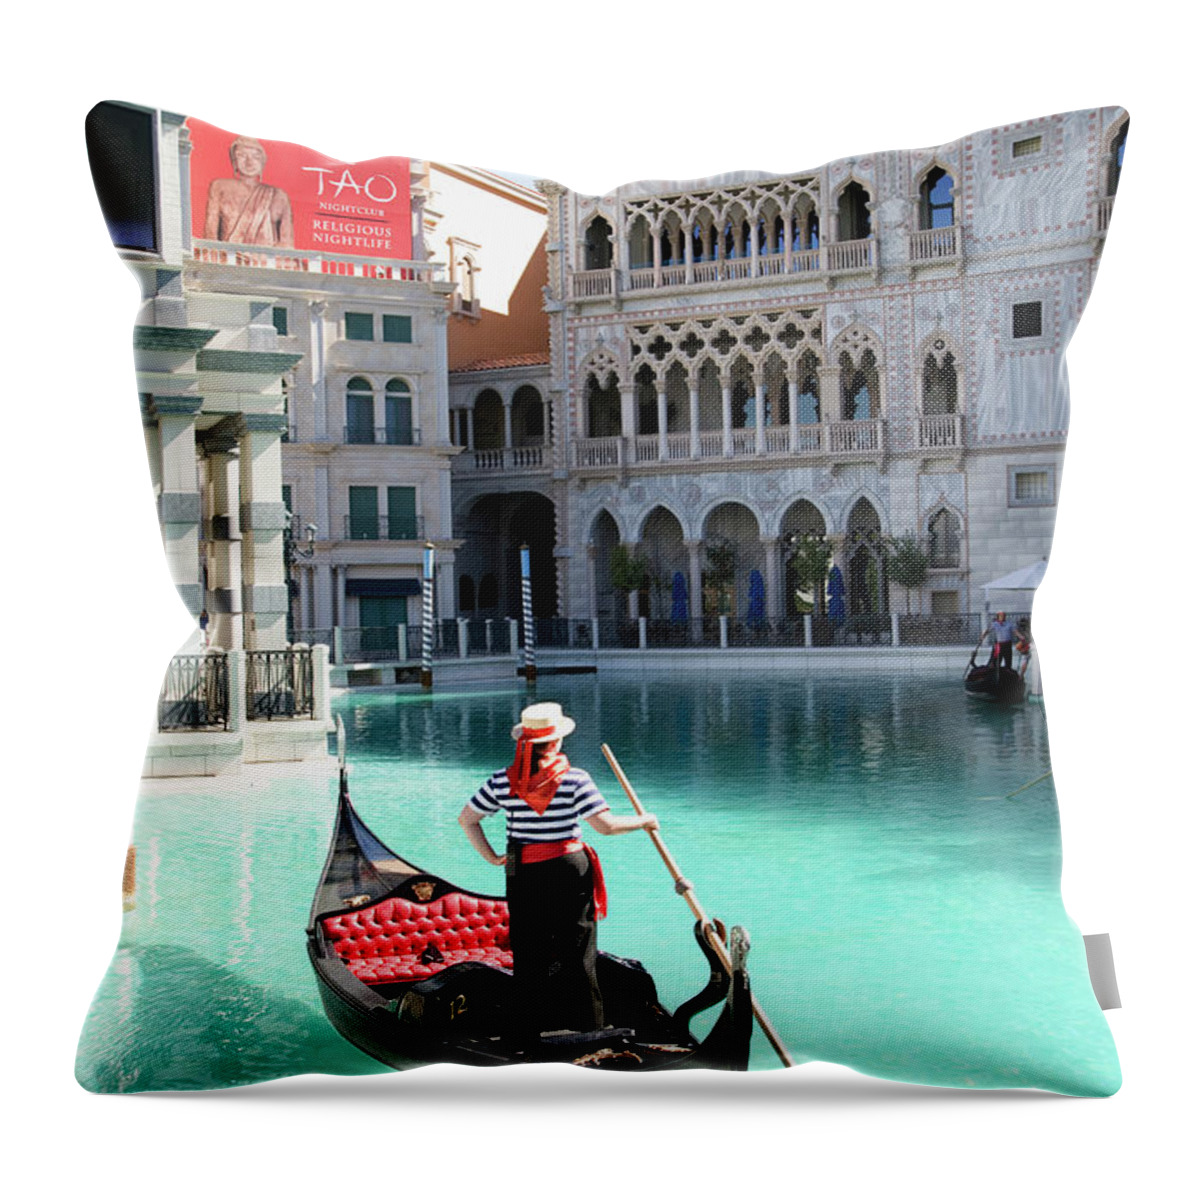 Venetian Hotel Throw Pillow featuring the photograph Usa, Nevada, Las Vegas, The Venetian #1 by Buena Vista Images